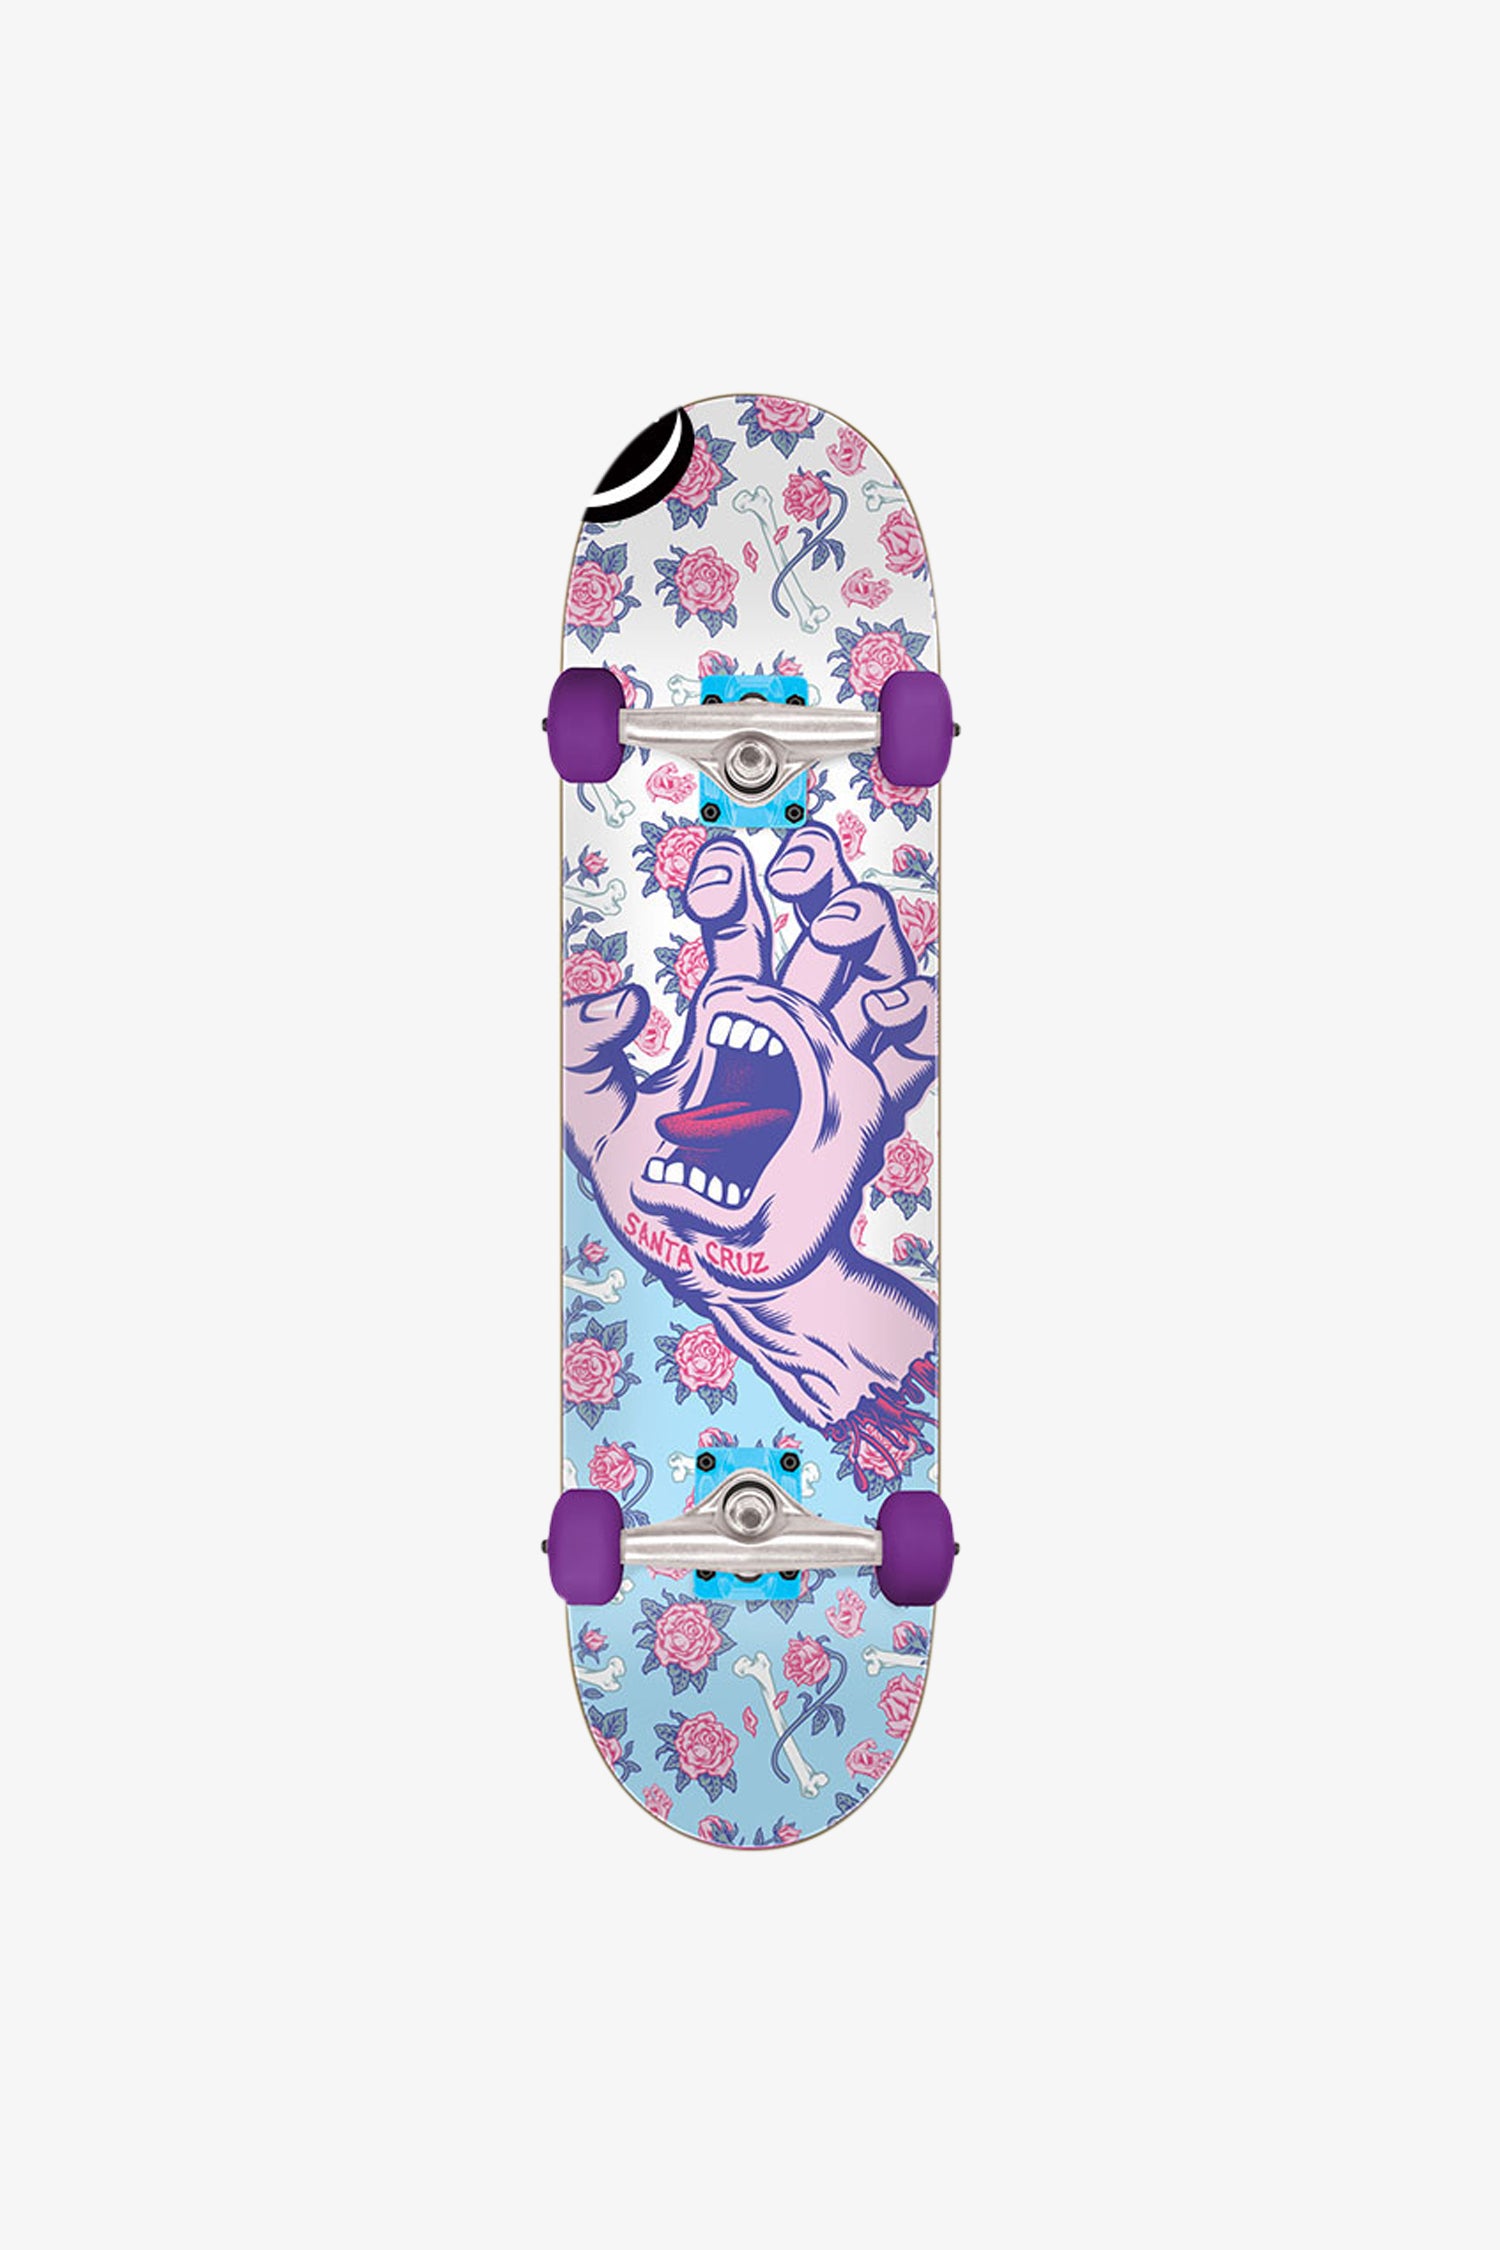 Selectshop FRAME - SANTA CRUZ Floral Decay Mini Skate Complete Skateboards Dubai